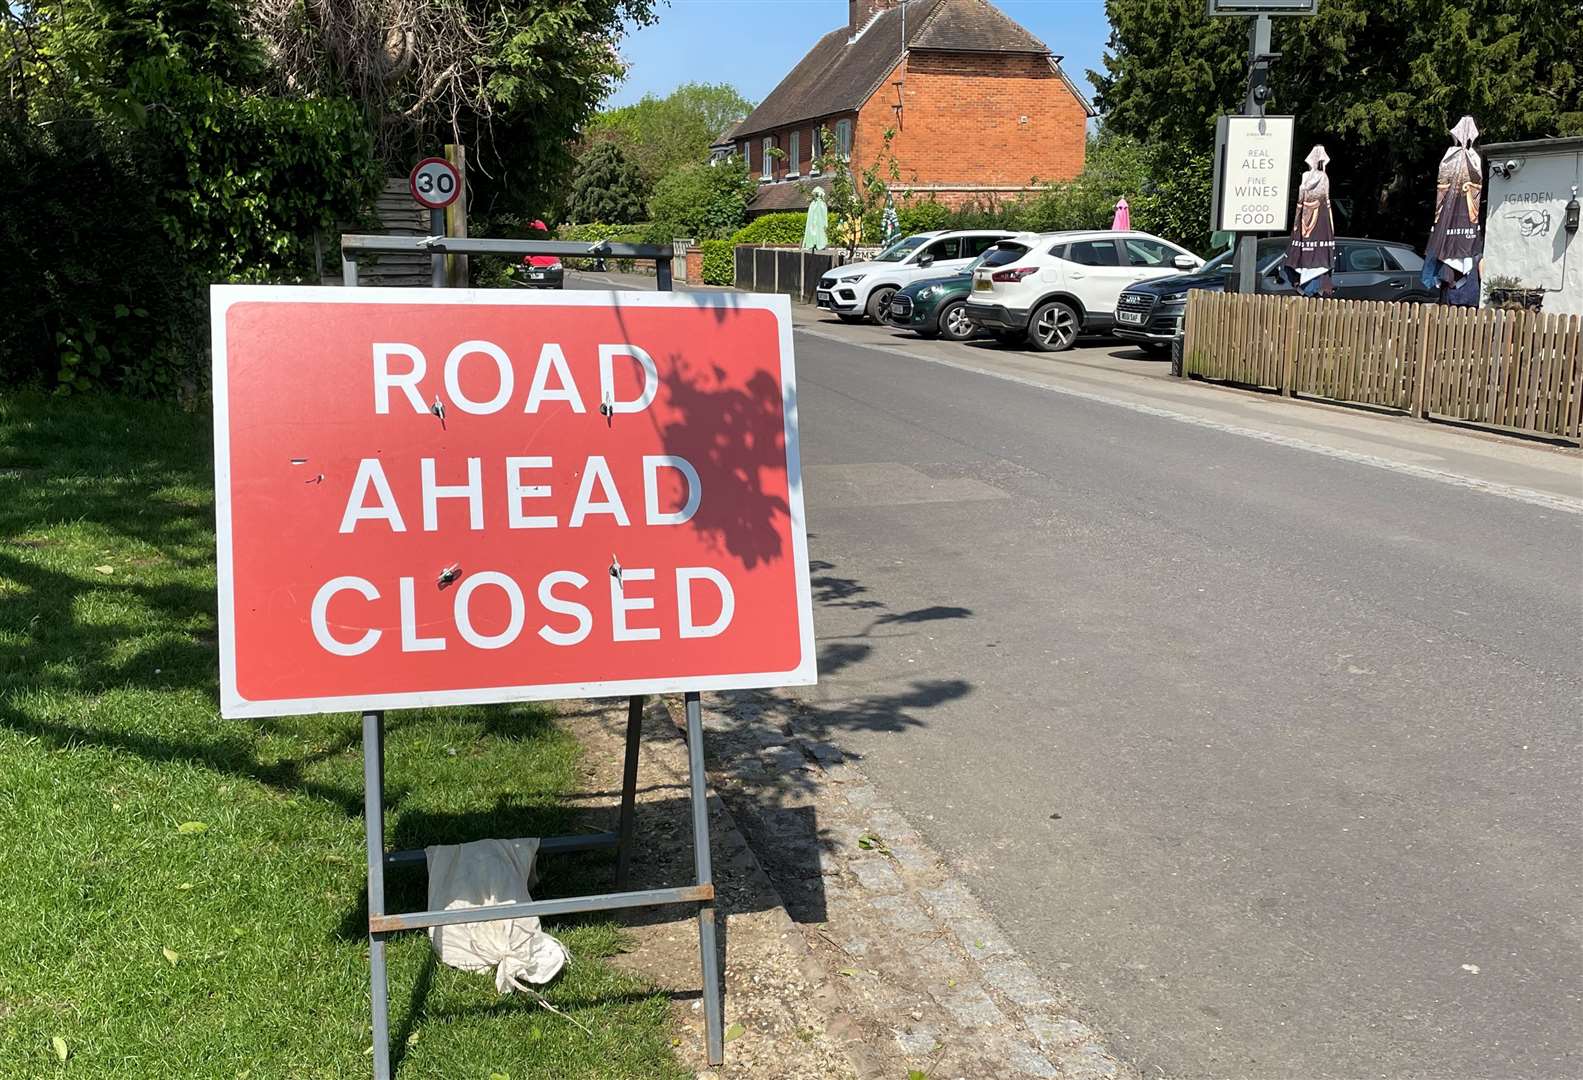 Motorists can still access the pub and garden centre in Teston Road despite the signs